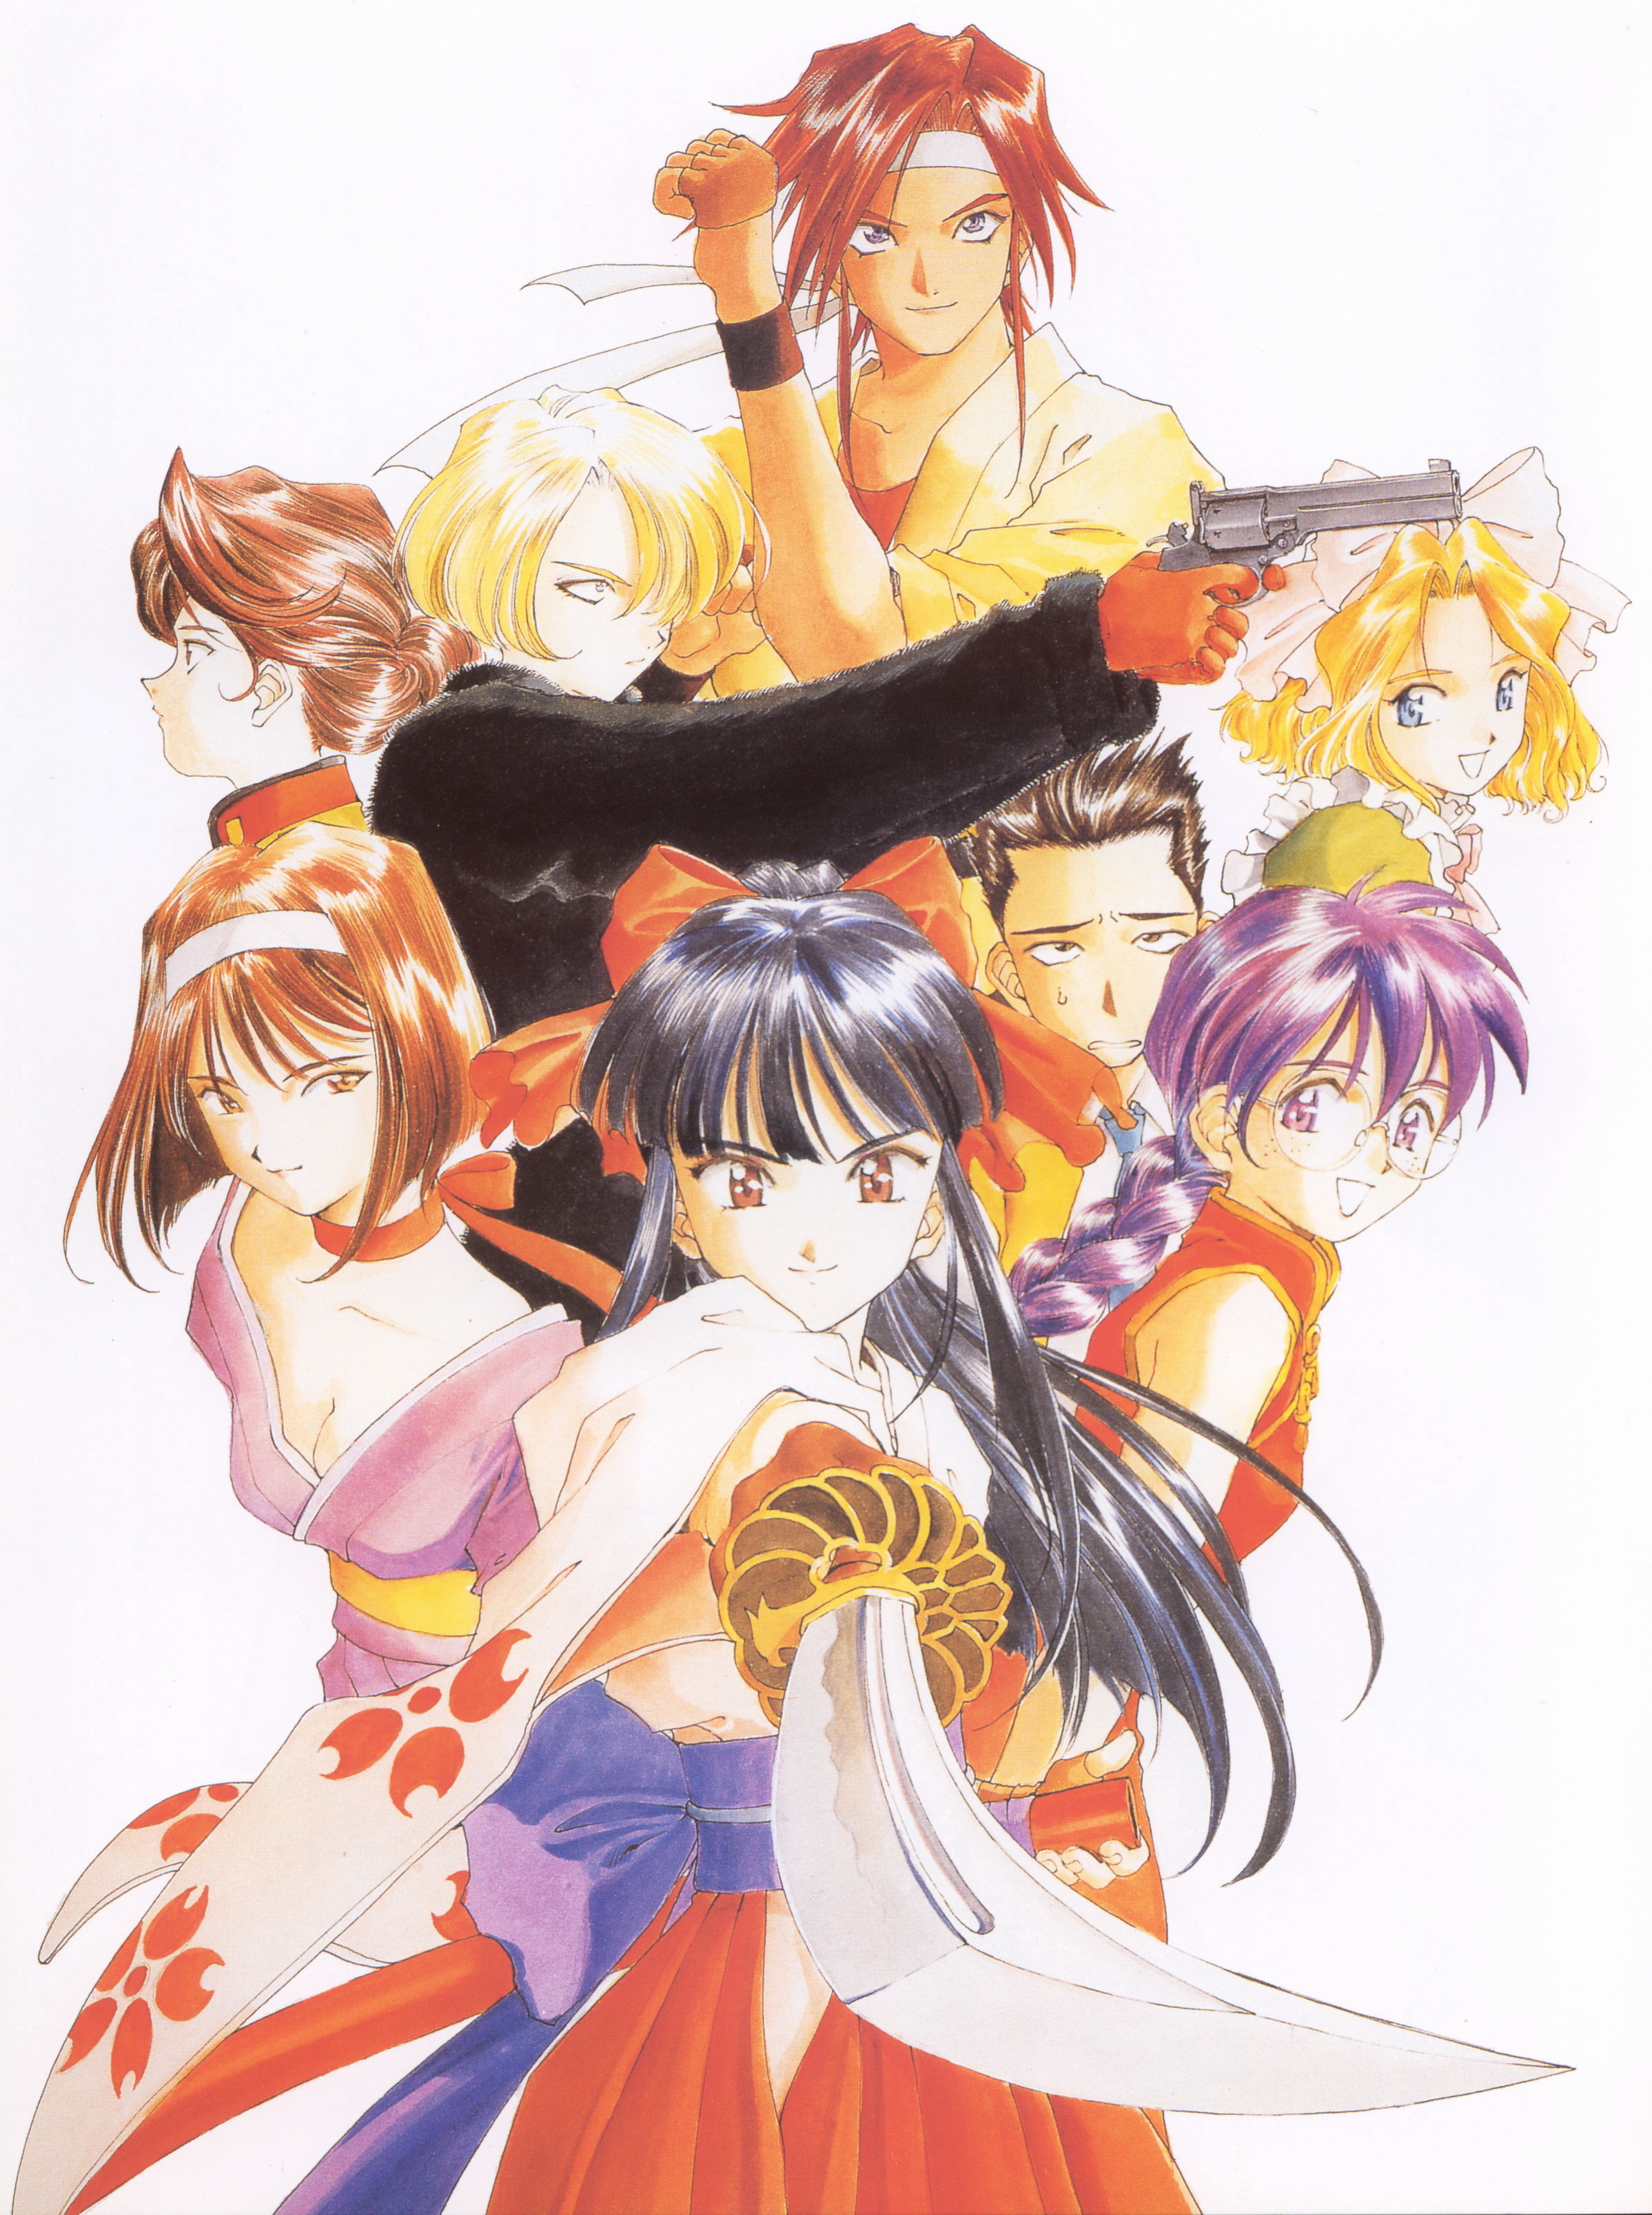 Wallpaper love, game, Sakura, anime, kiss, ninja, asian, manga for mobile  and desktop, section сэйнэн, resolution 3204x2090 - download